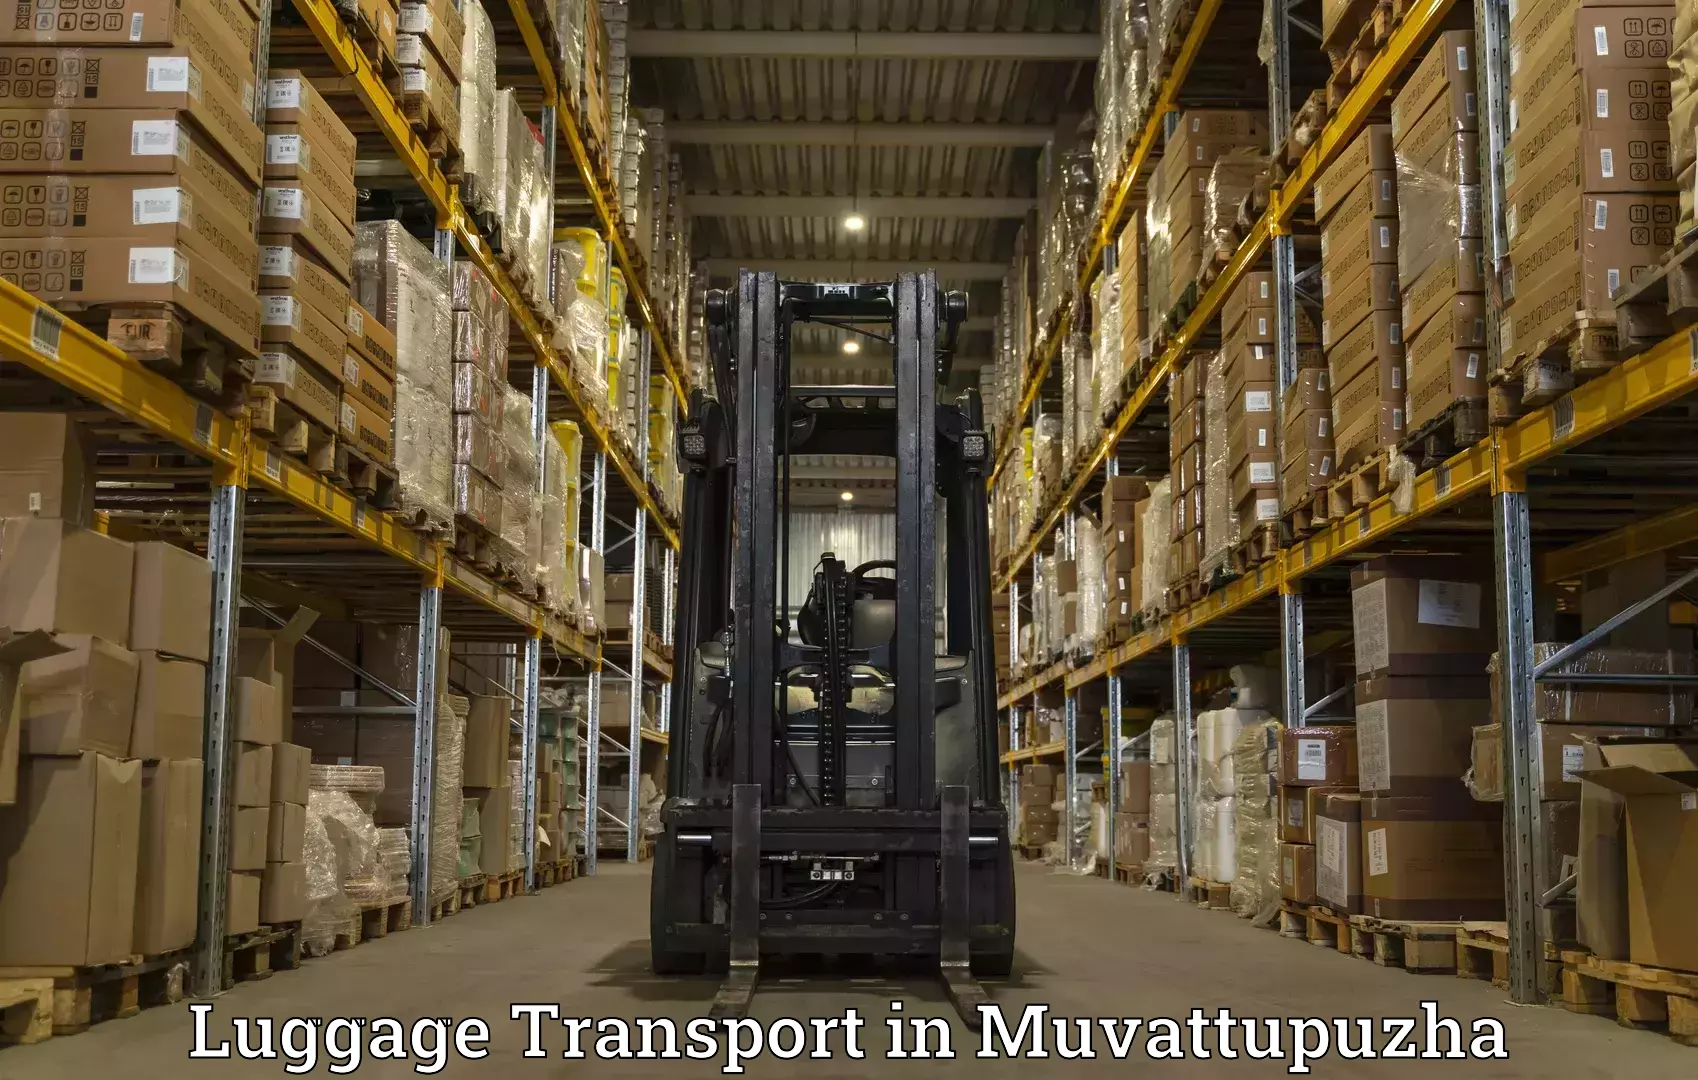 Group luggage shipping in Muvattupuzha